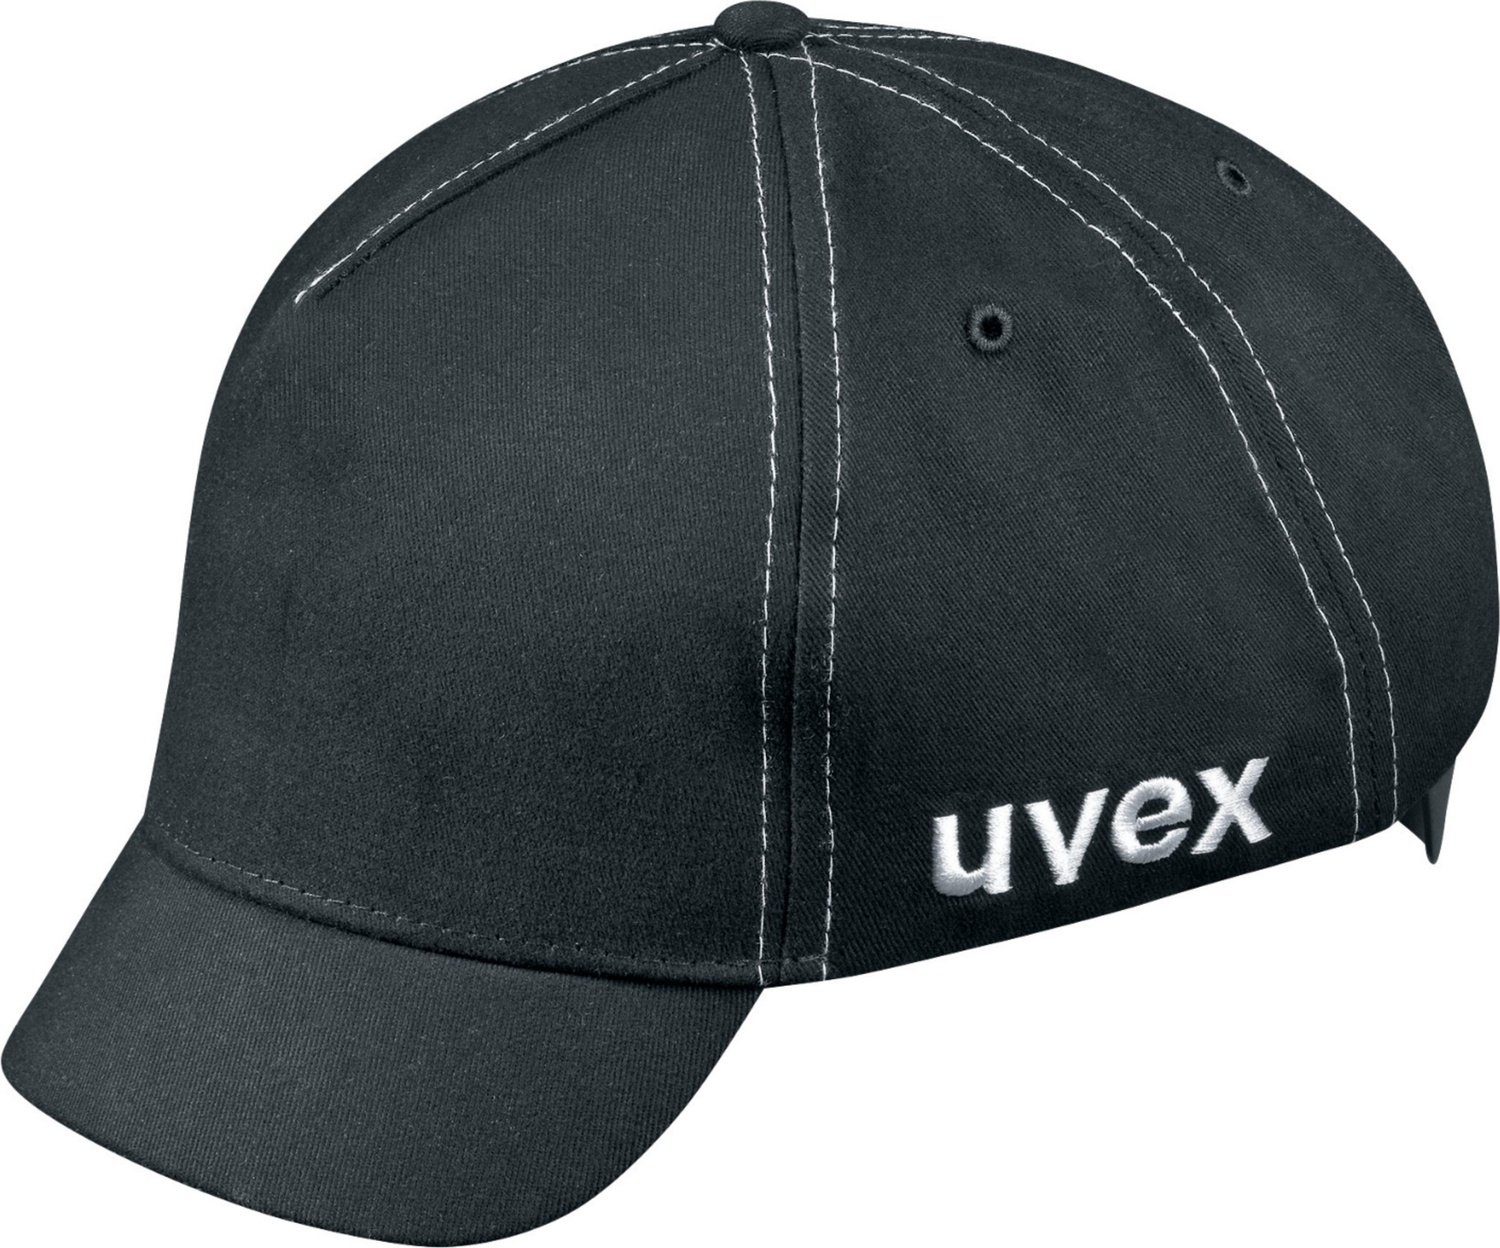 Kopfschutz Uvex